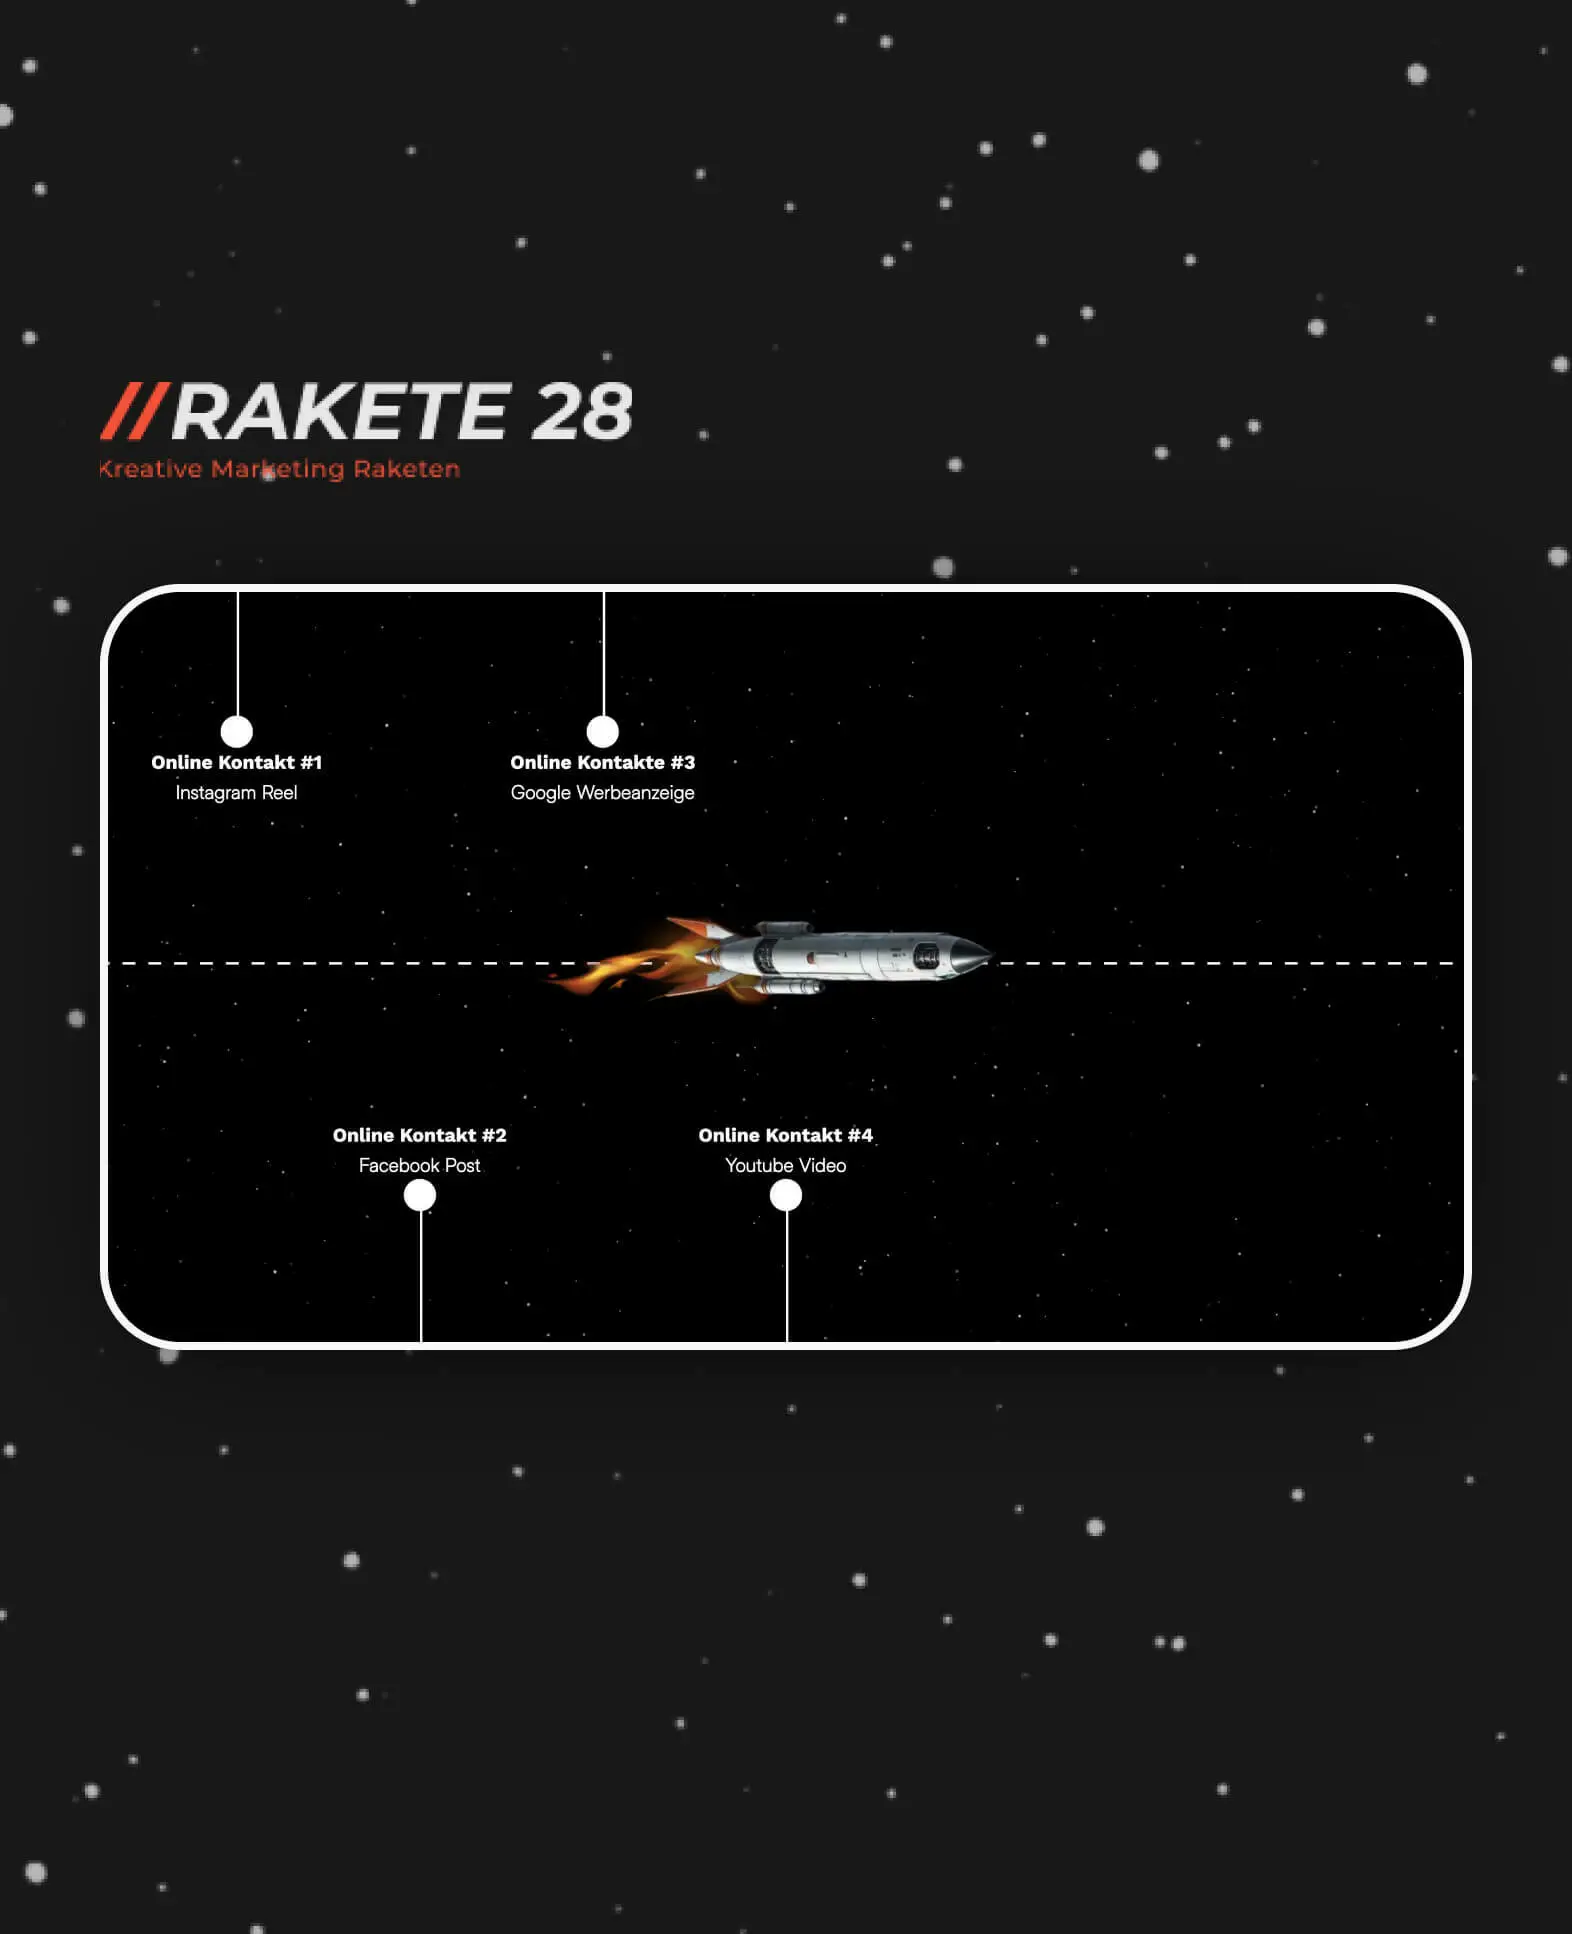 Rakete28 - Kreative Marketing Raketen - ein Artikel von Krisnetics - Kristijan Jurčić